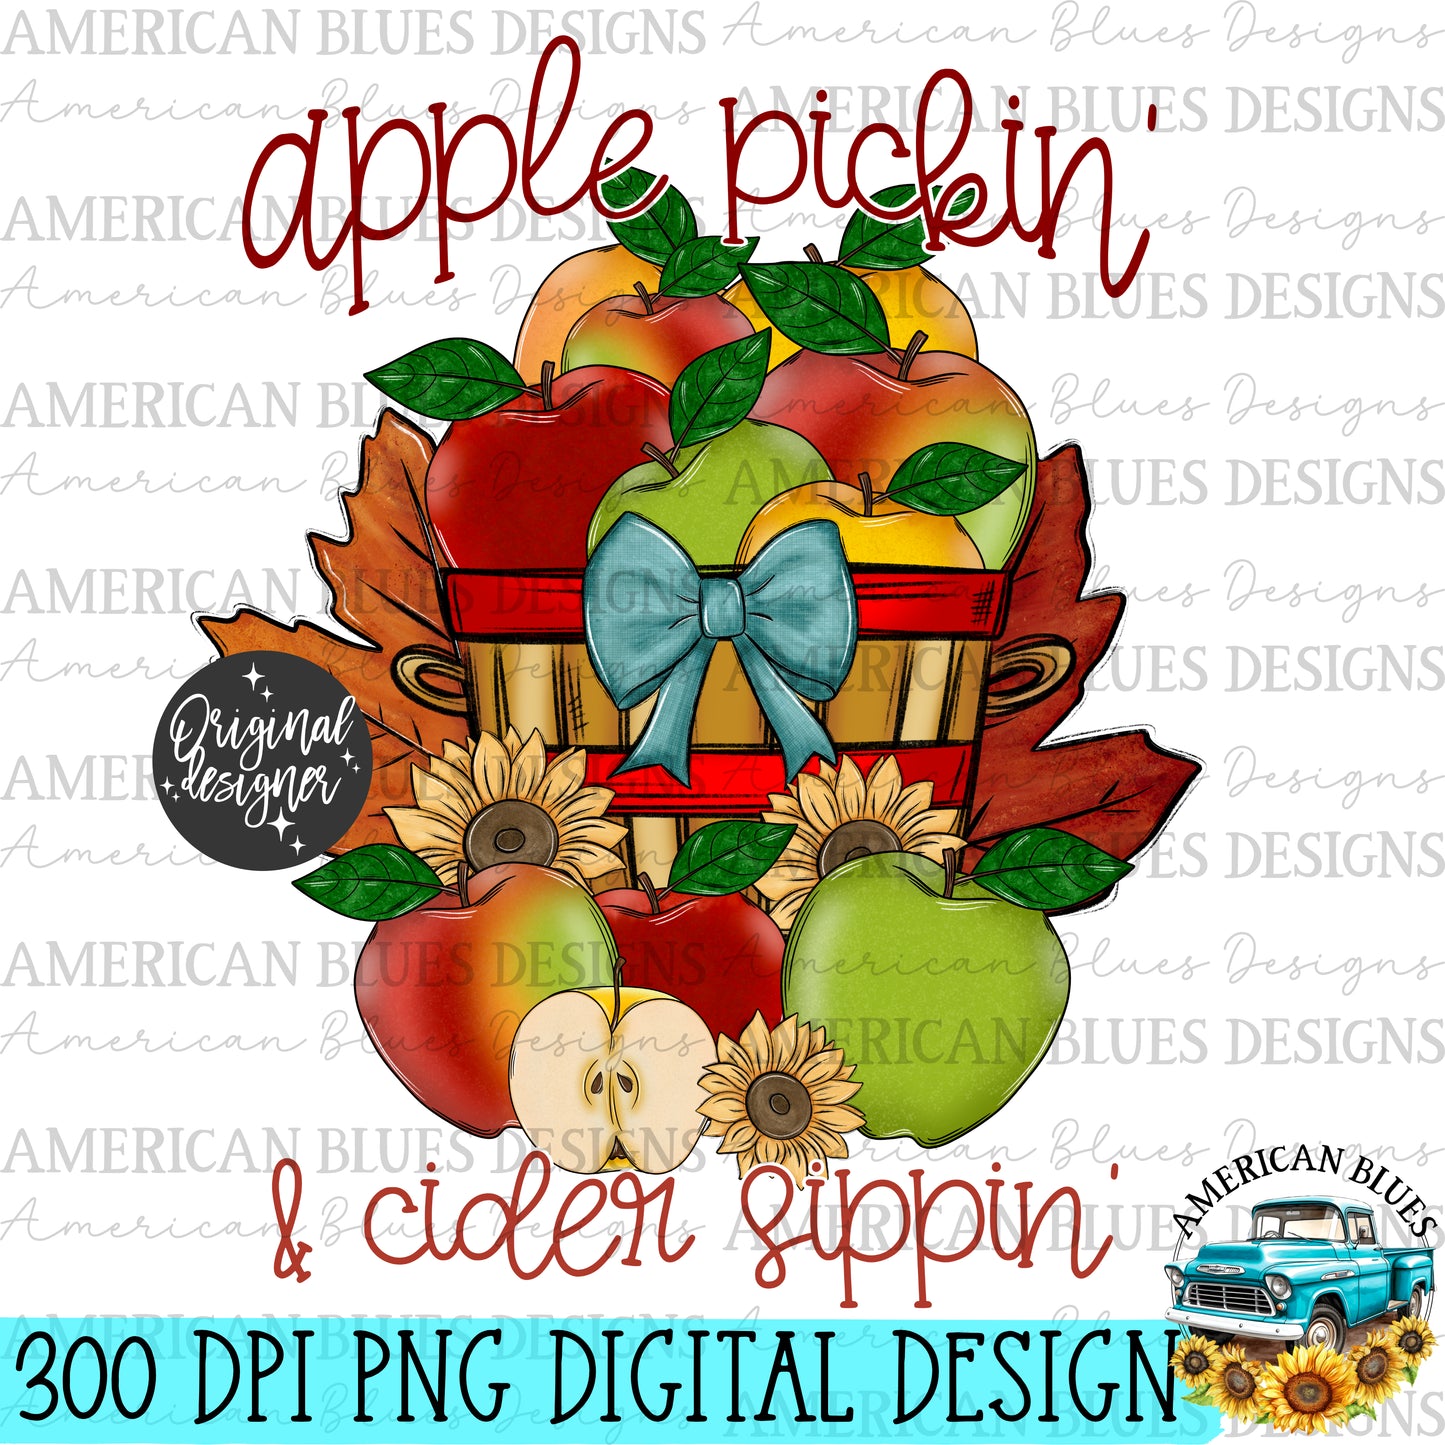 Apple pikcin' & cider sippin' digital design | American Blues Designs 